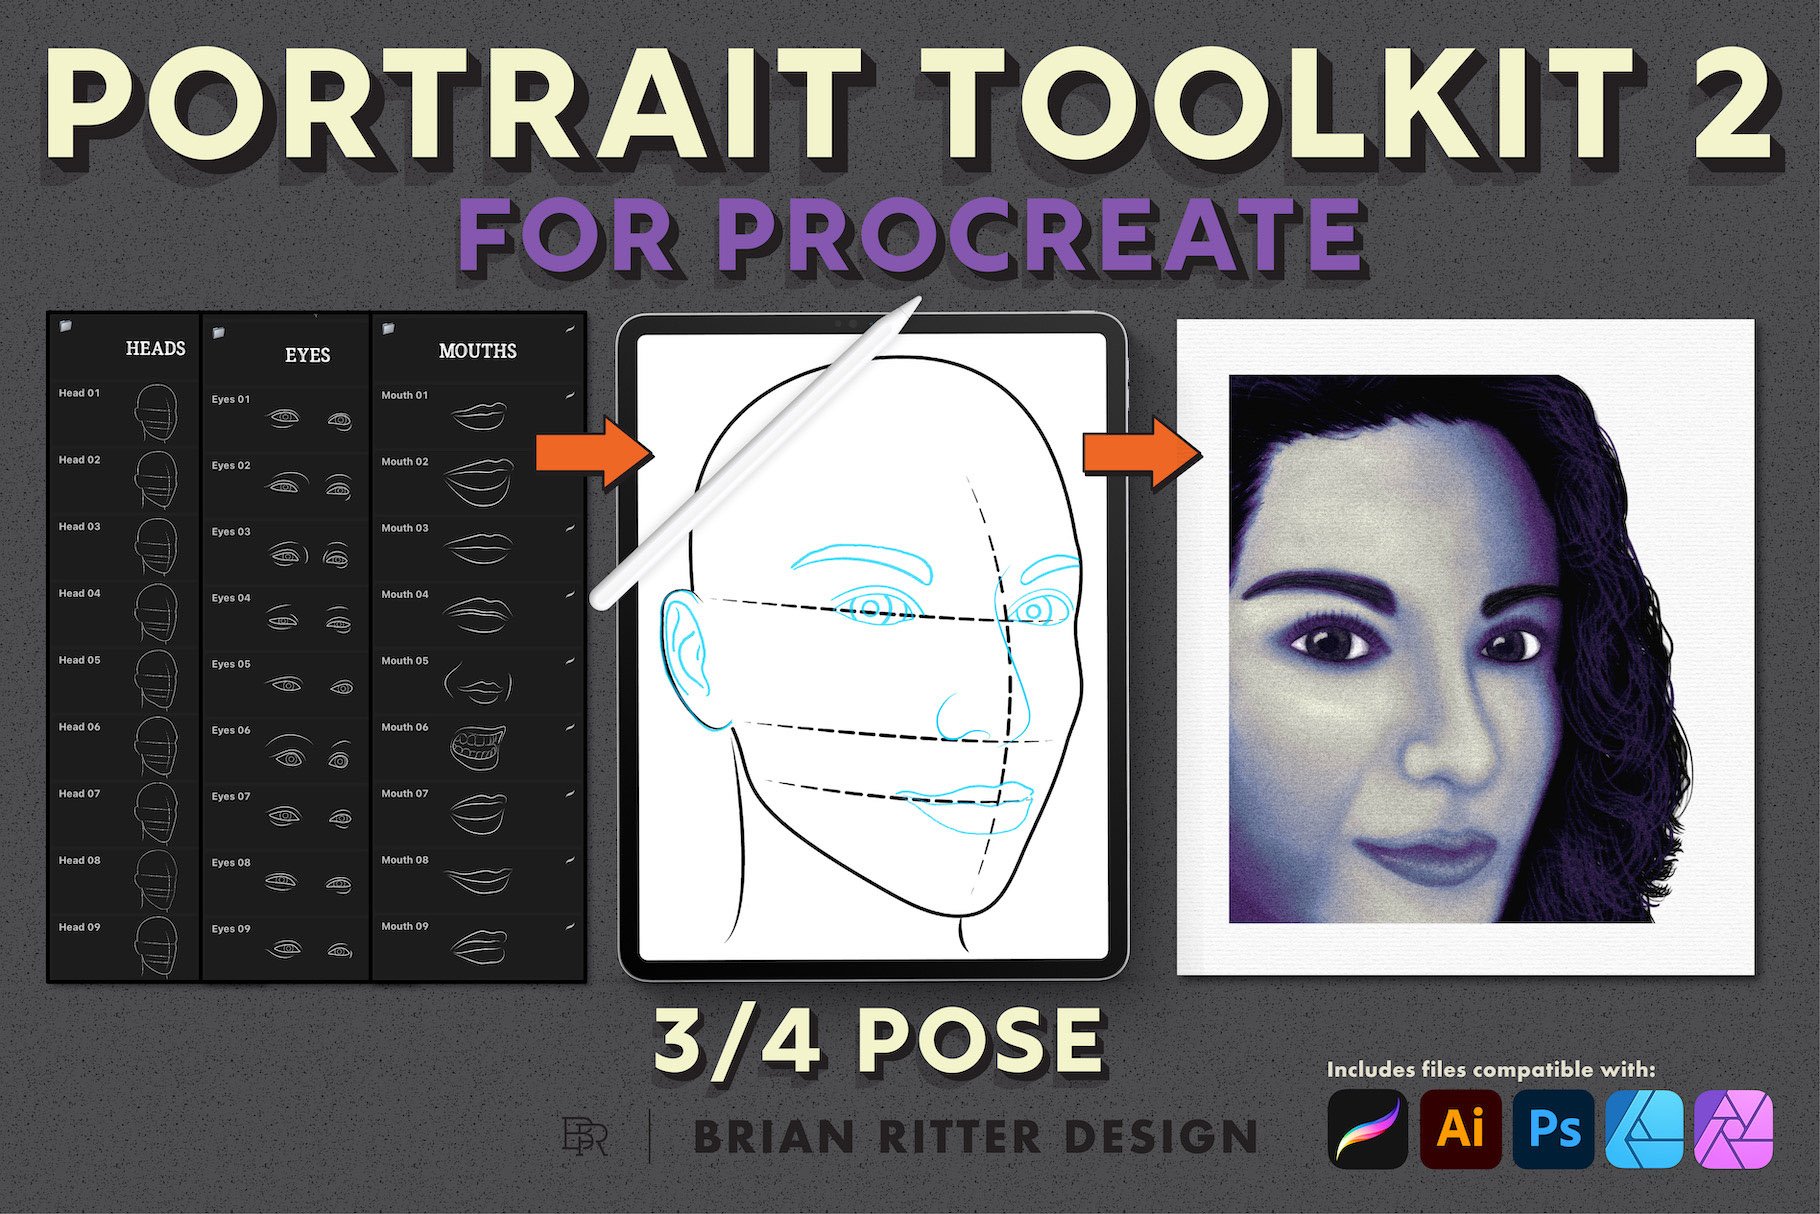 Portrait Toolkit 2 for Procreatecover image.